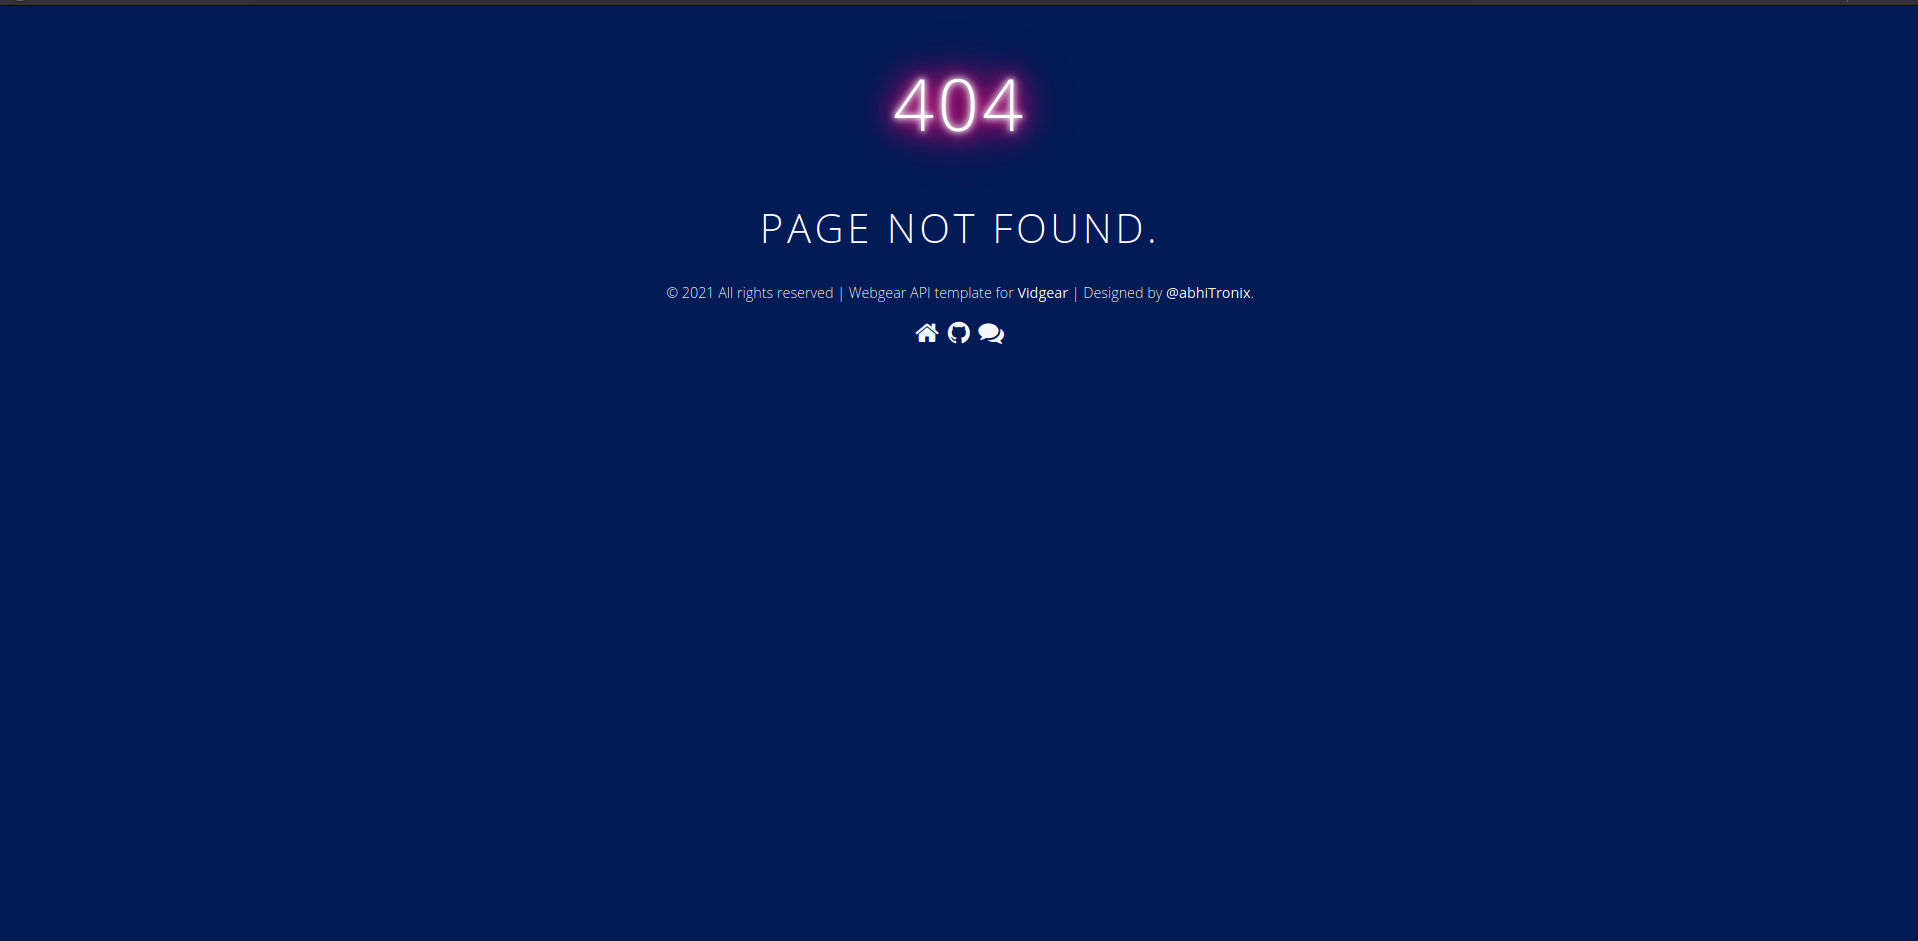 WebGear default 404 page